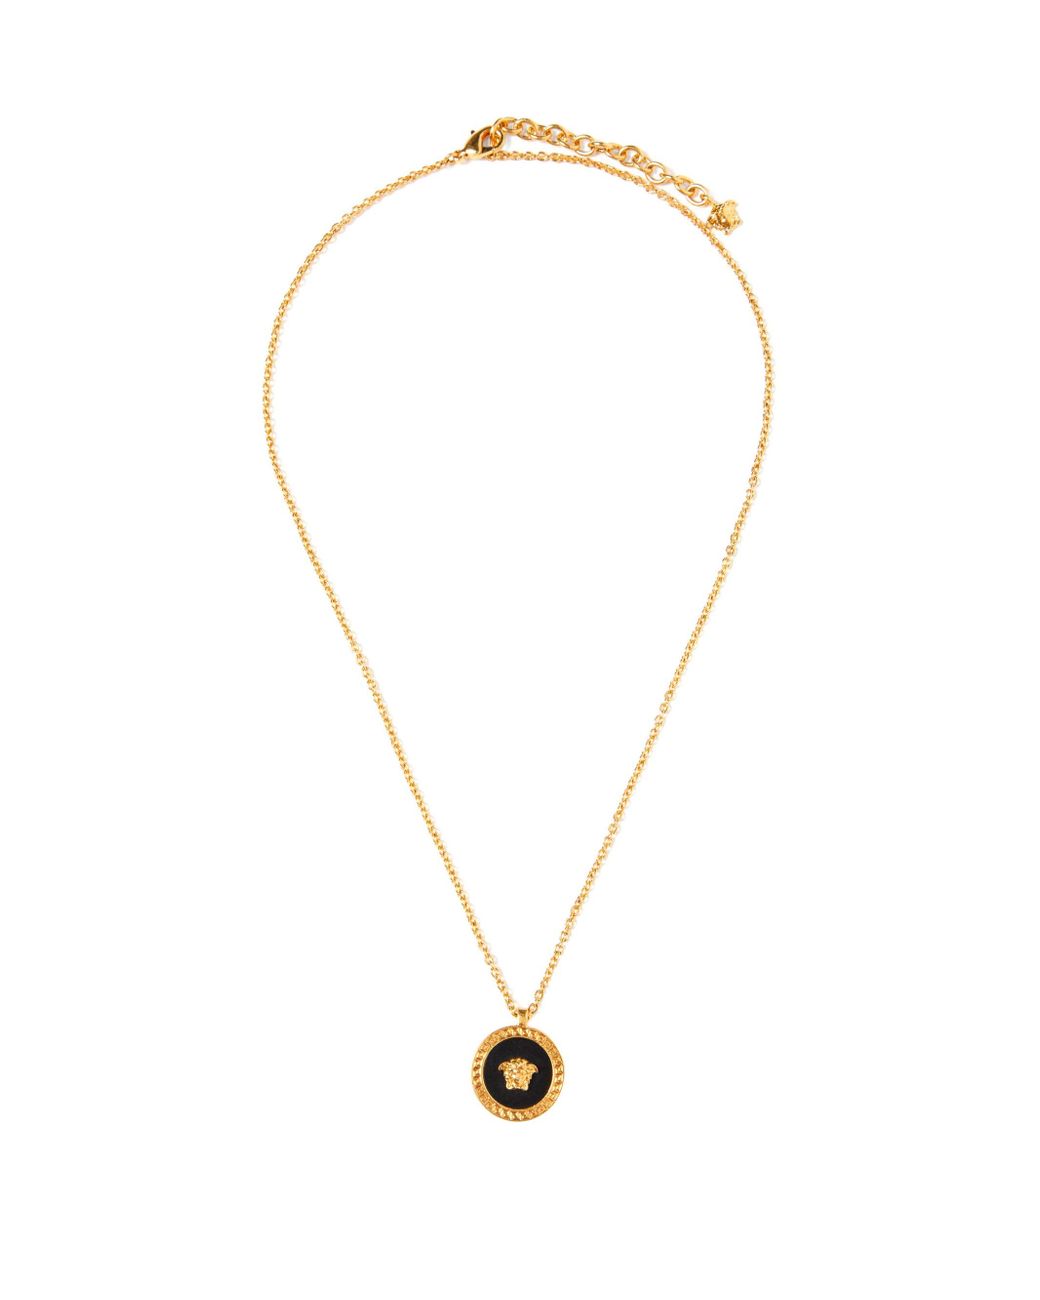 Versace Medusa Pendant Necklace in Gold (Metallic) for Men - Save 49%